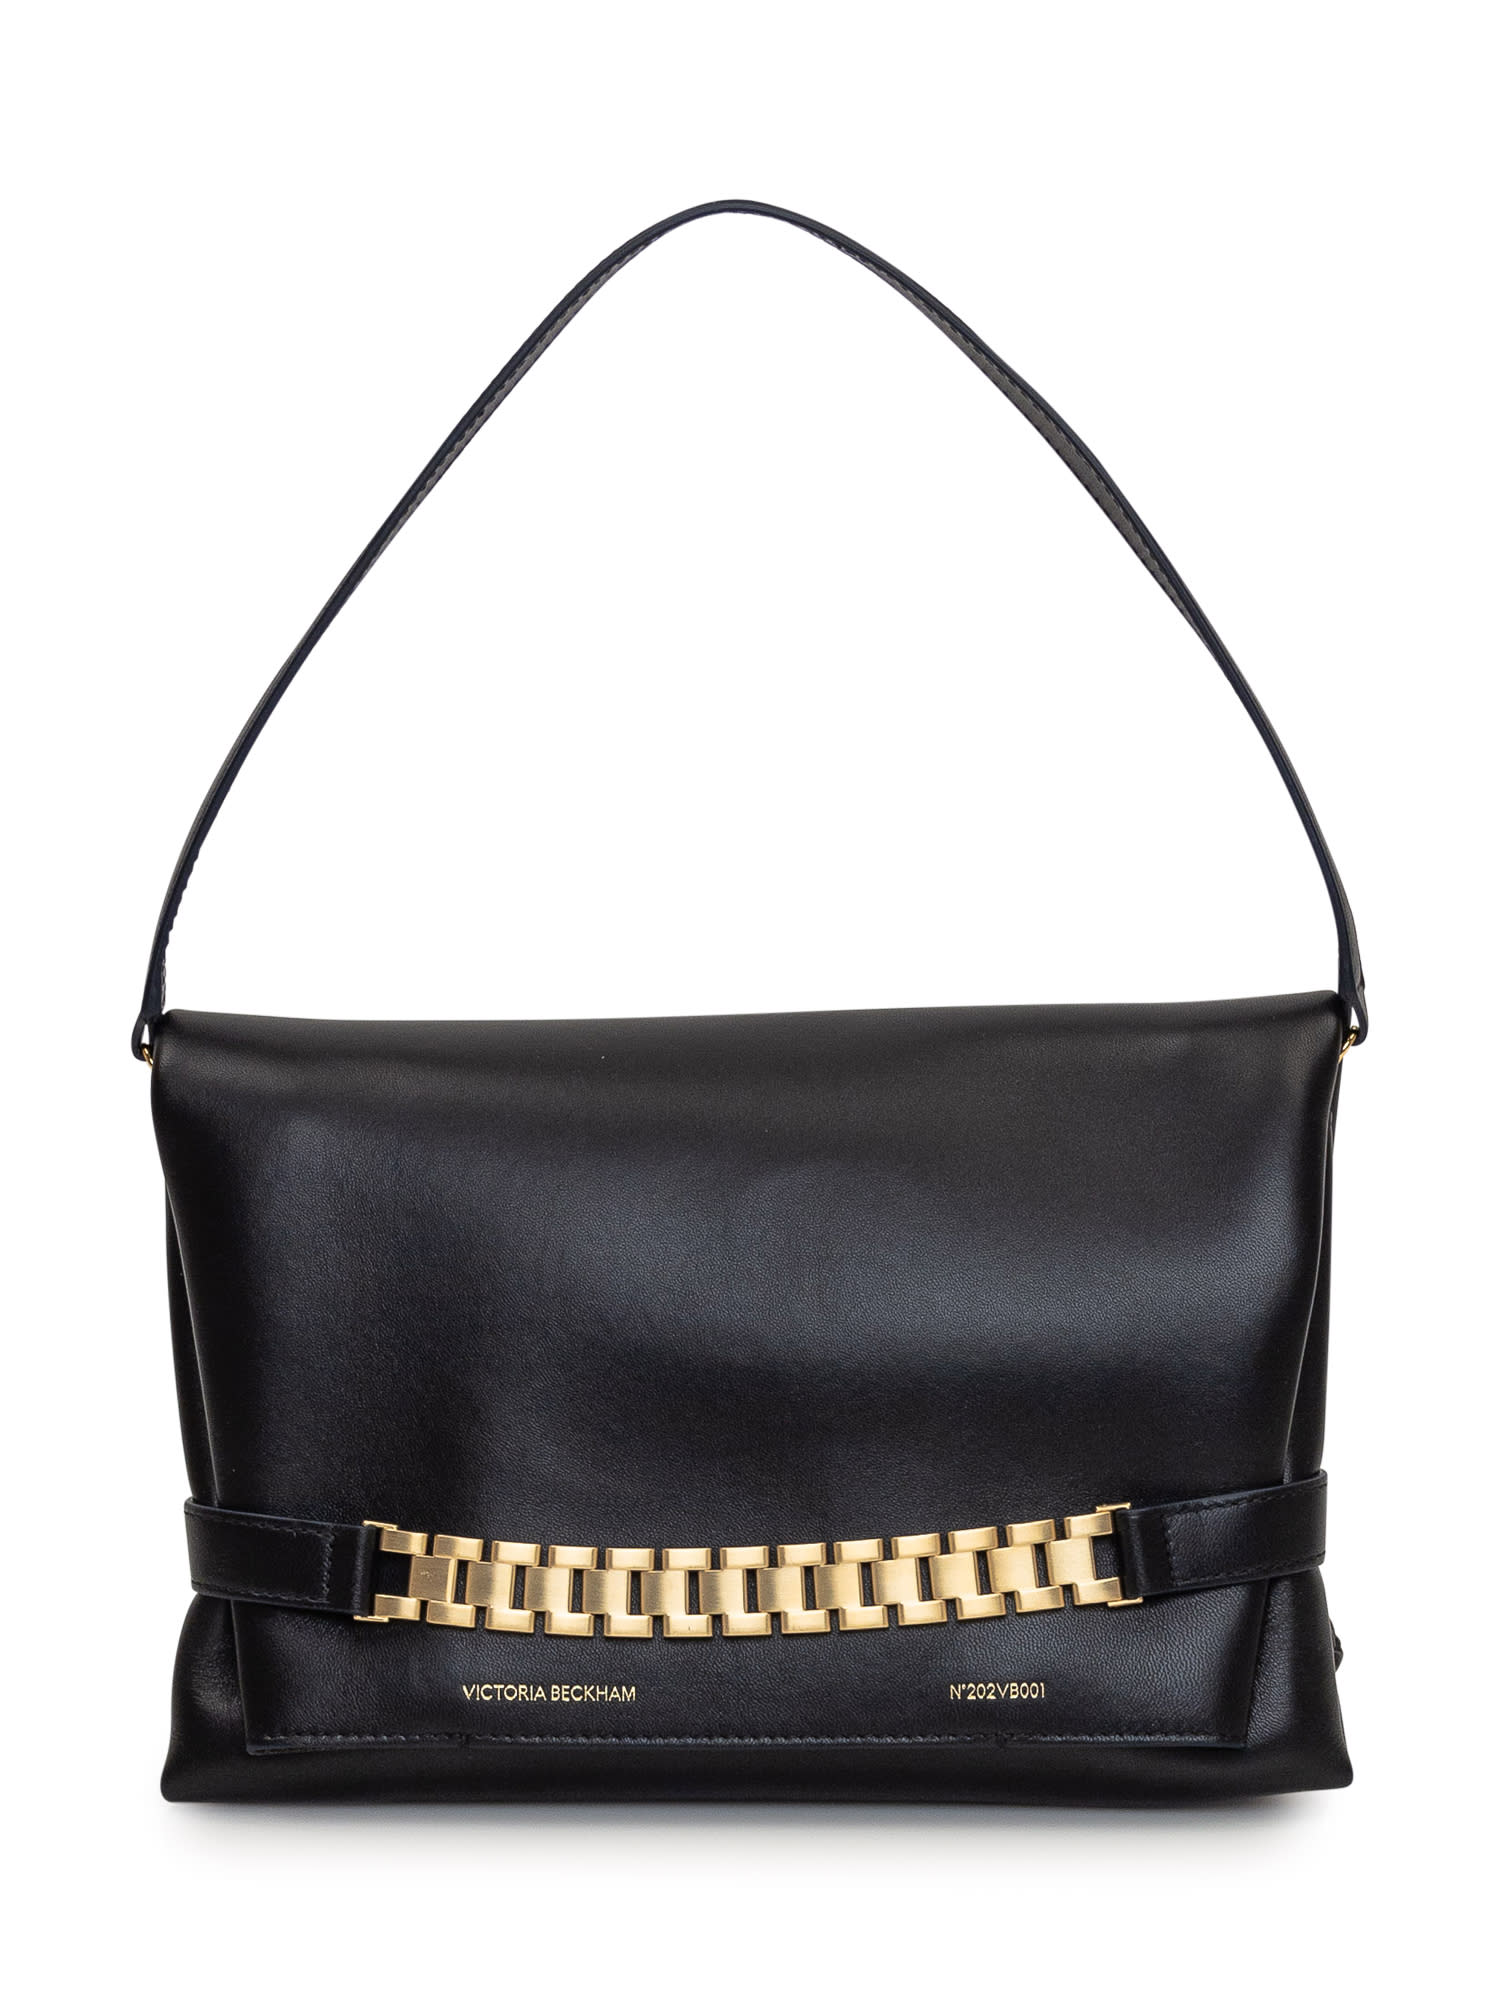 Victoria Beckham Bag With Chain In Nero